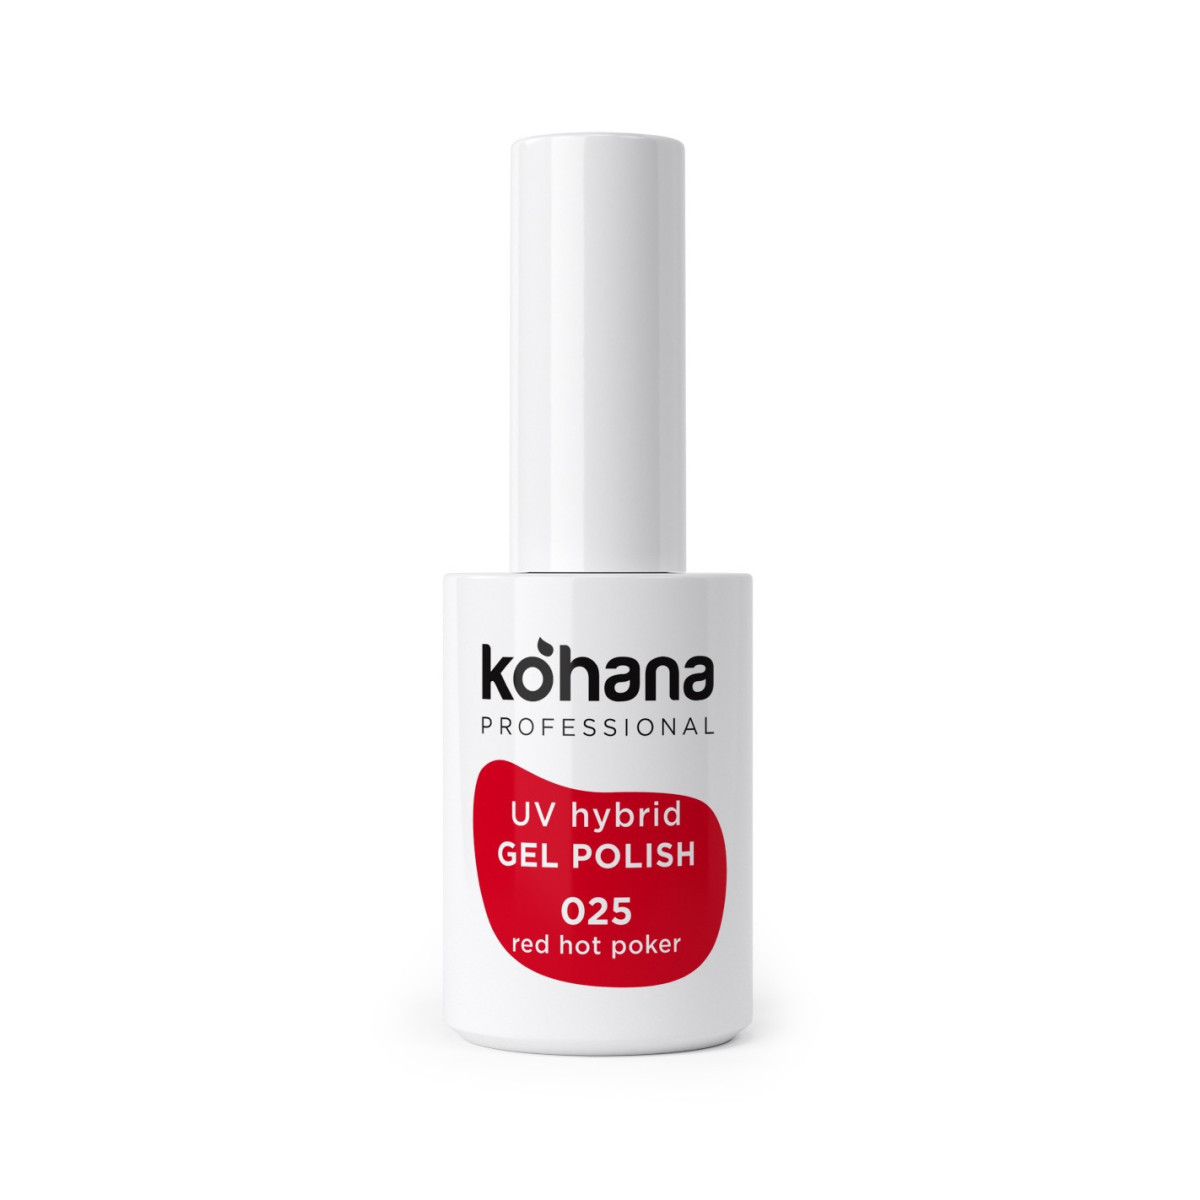 Kohana 025 Hot Red Poker Gel Polish 10ml